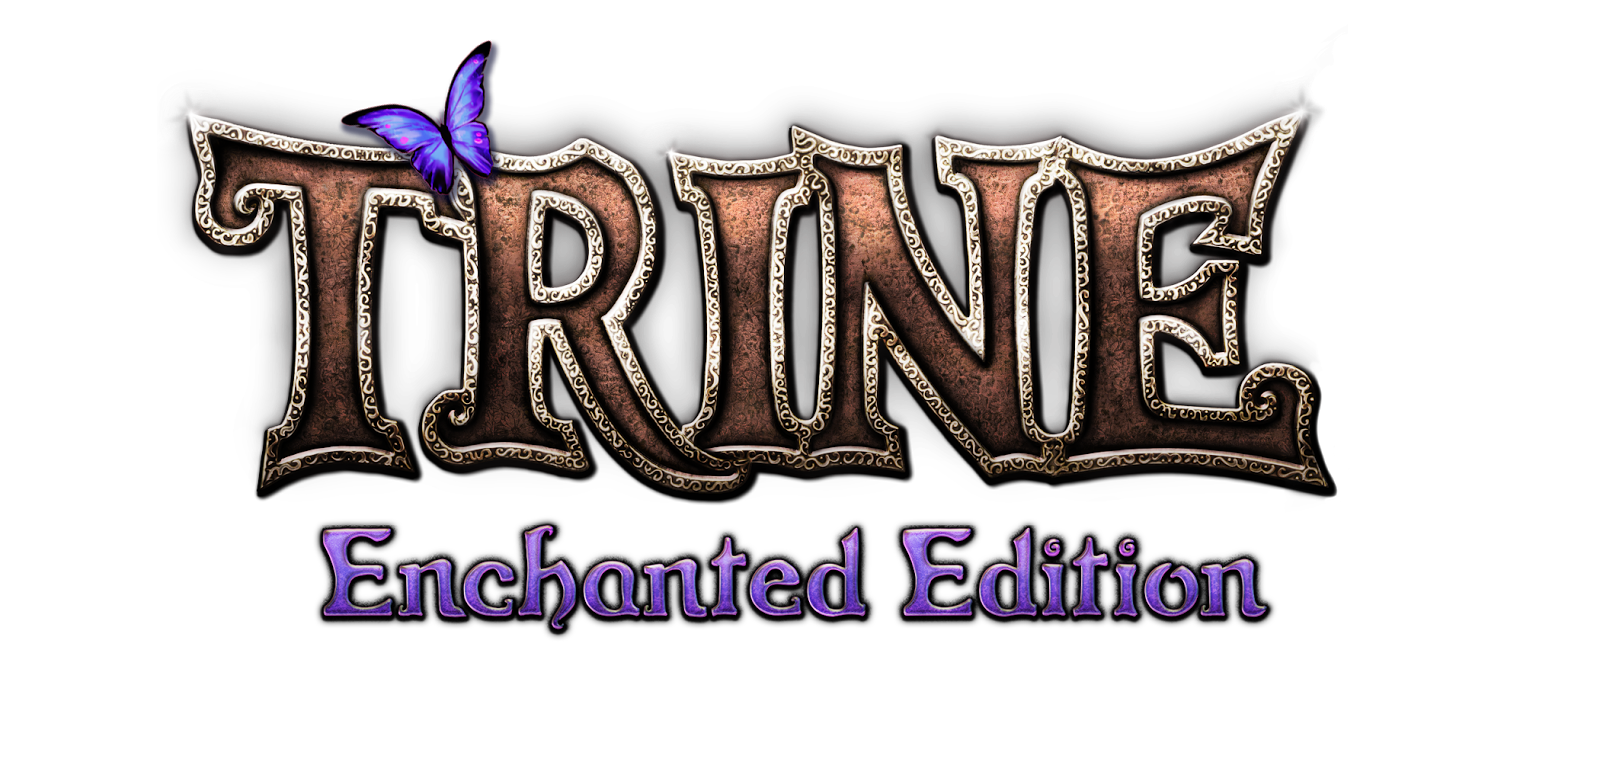 Trine enchanted edition